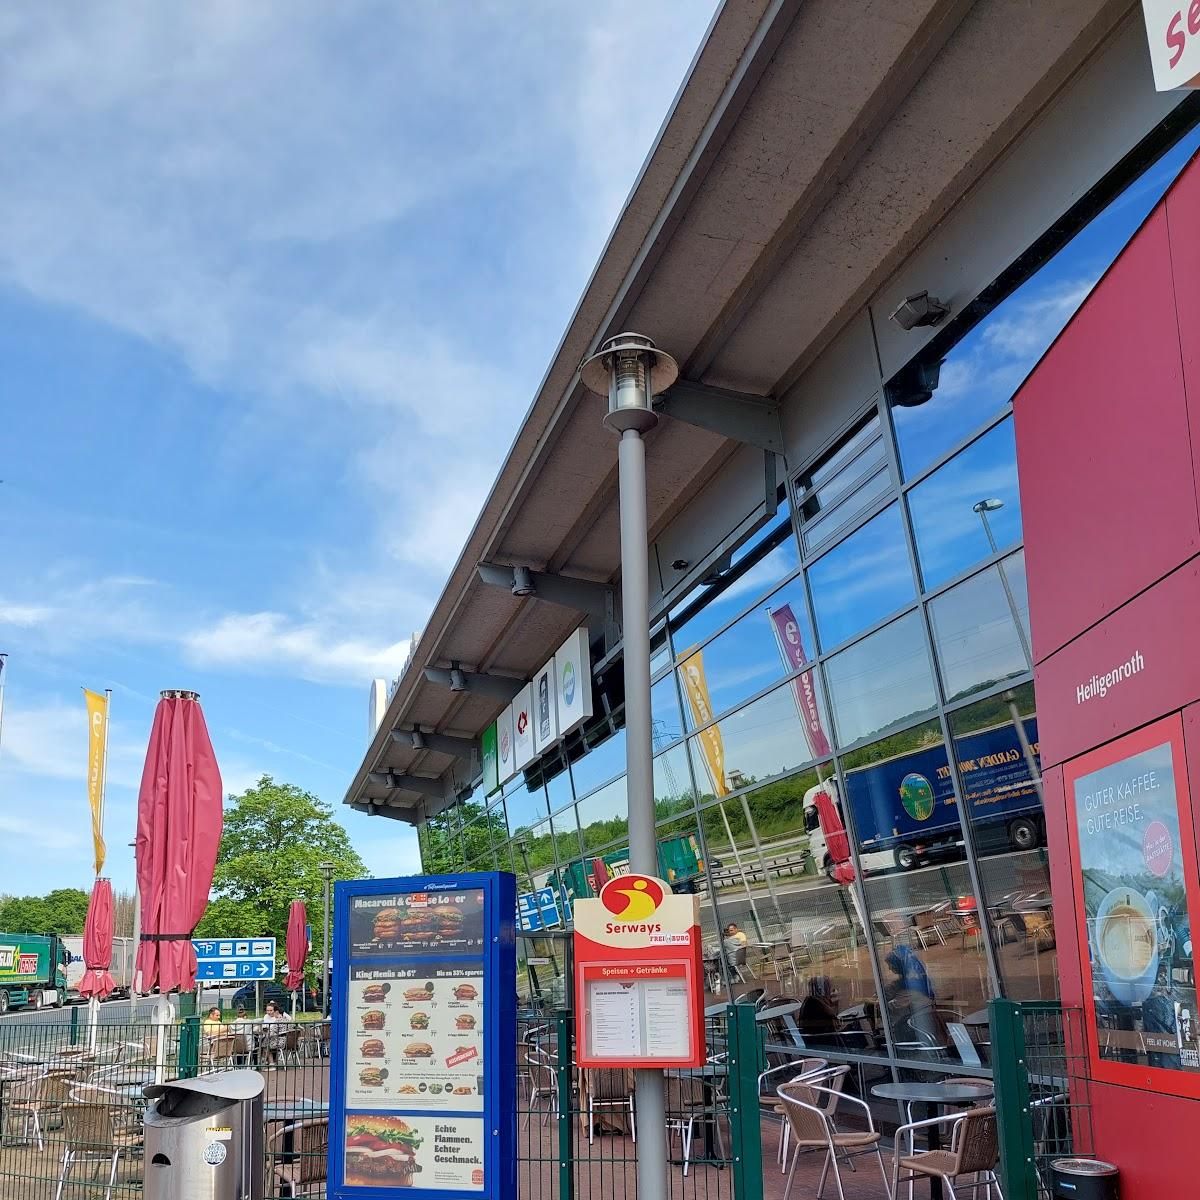 Restaurant "Burger King" in Heiligenroth